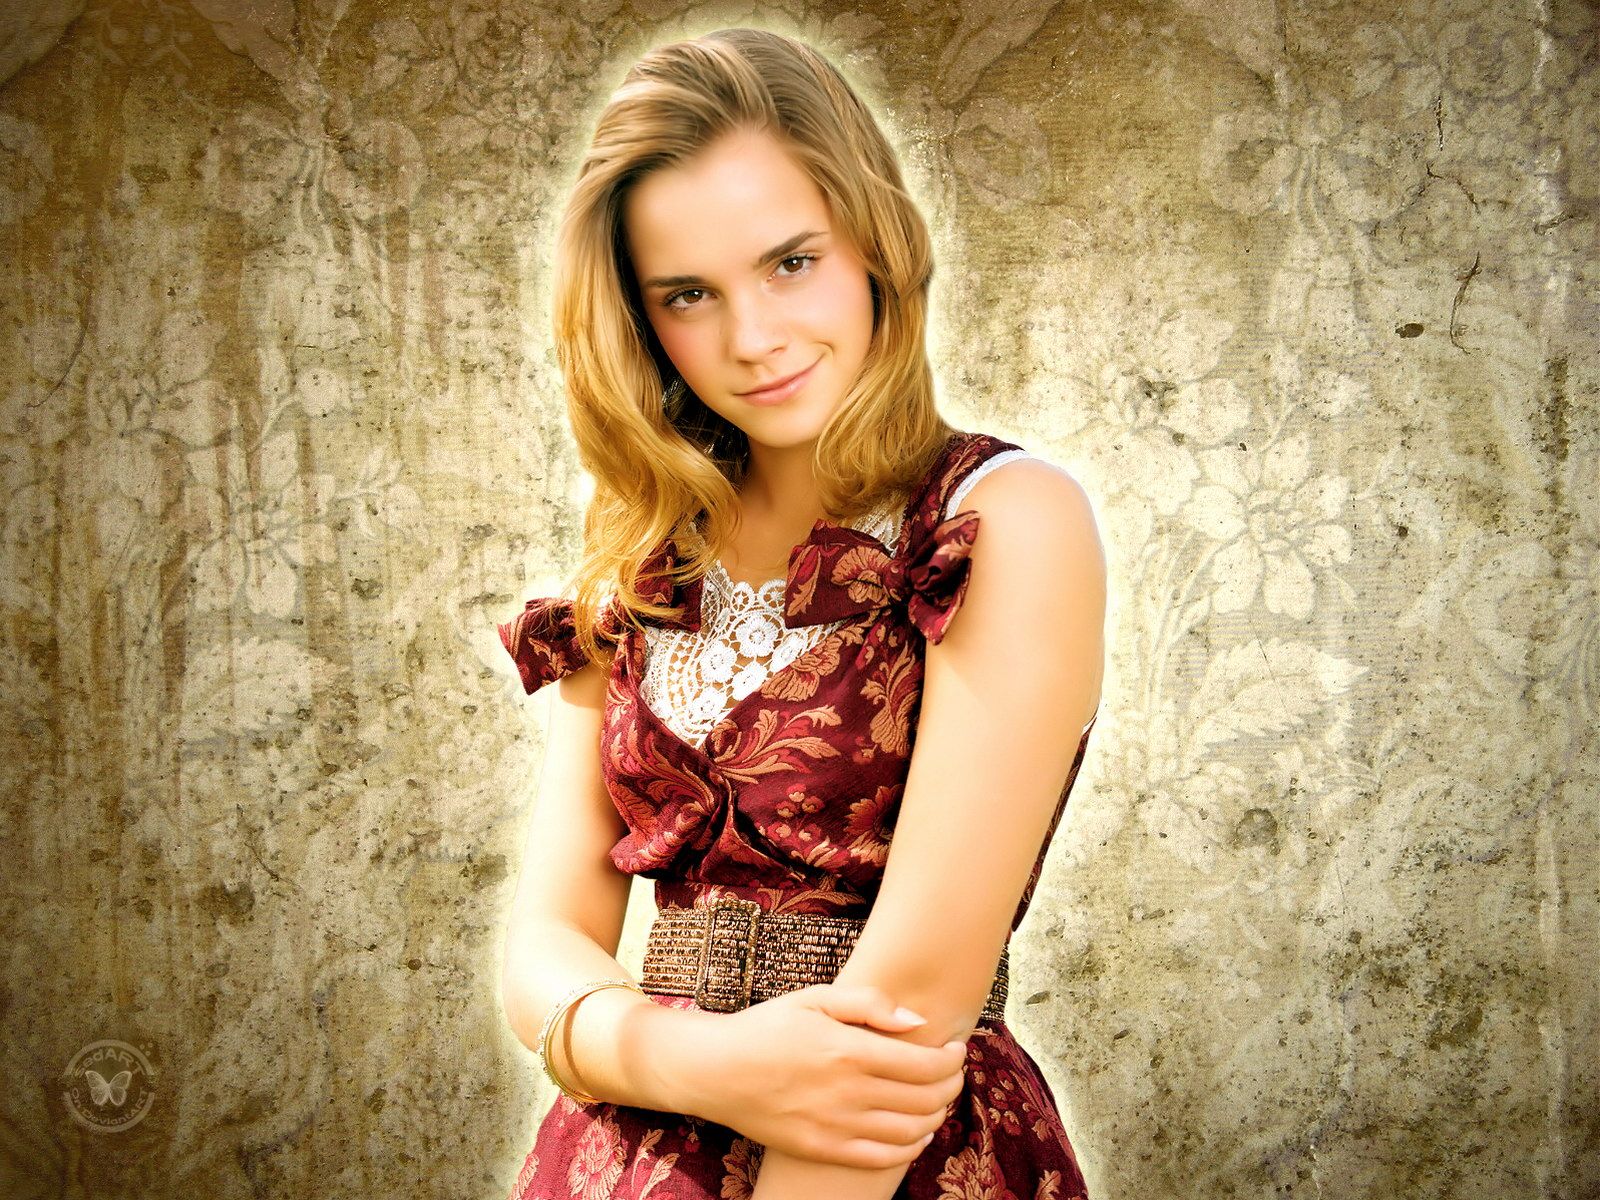 Emma Watson Wallpaper Photos Image